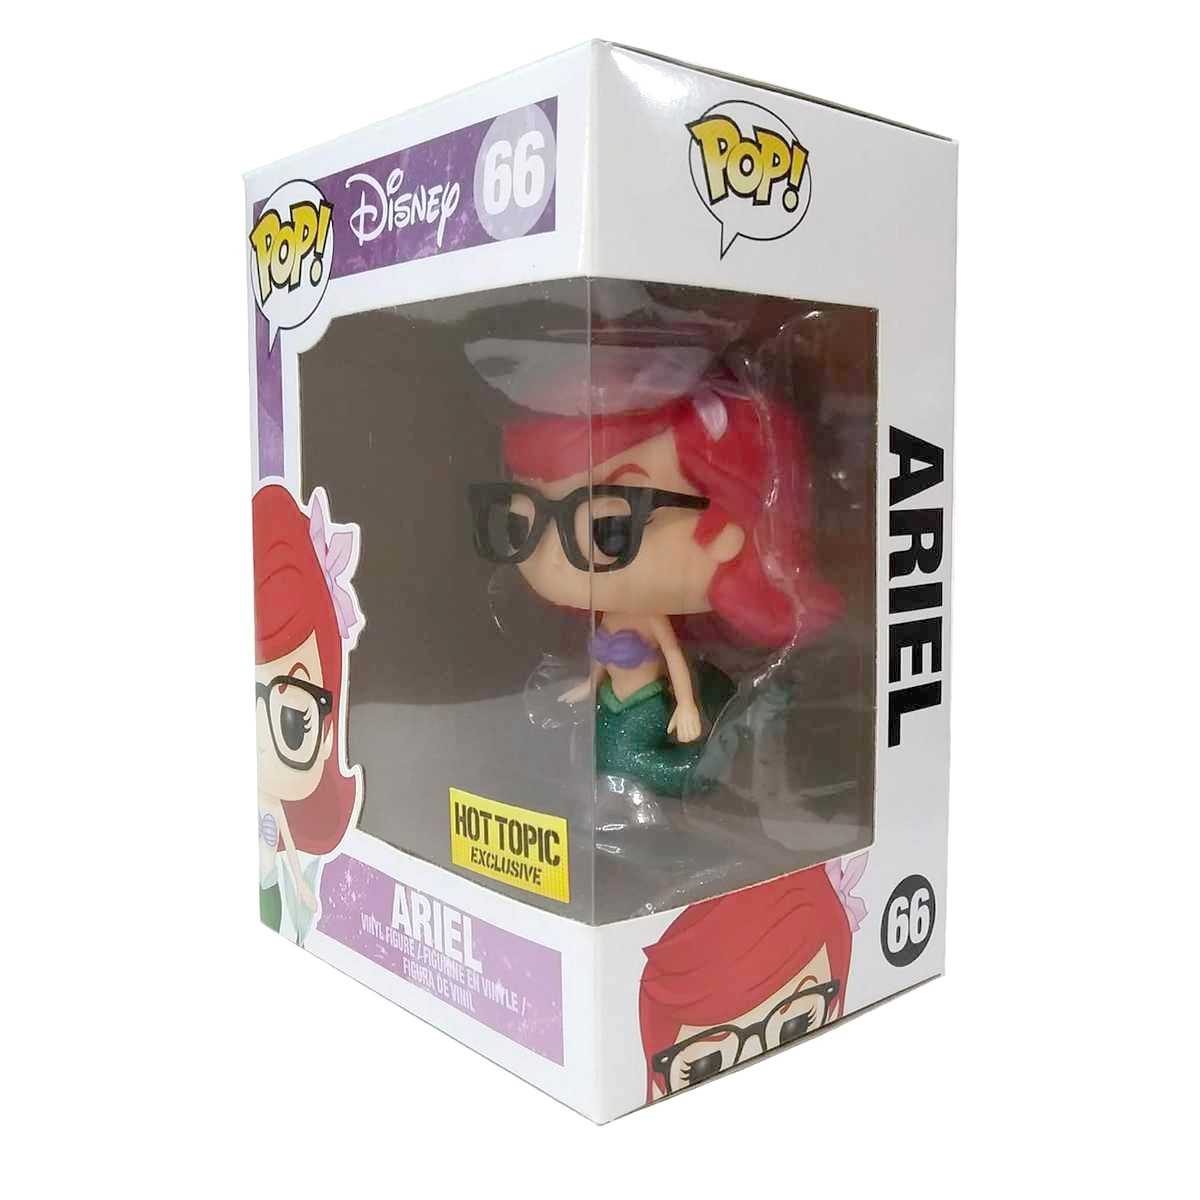 Funko Pop! Disney Ariel Nerd Gasses A Pequena Sereia com óculos #66 Vaulted